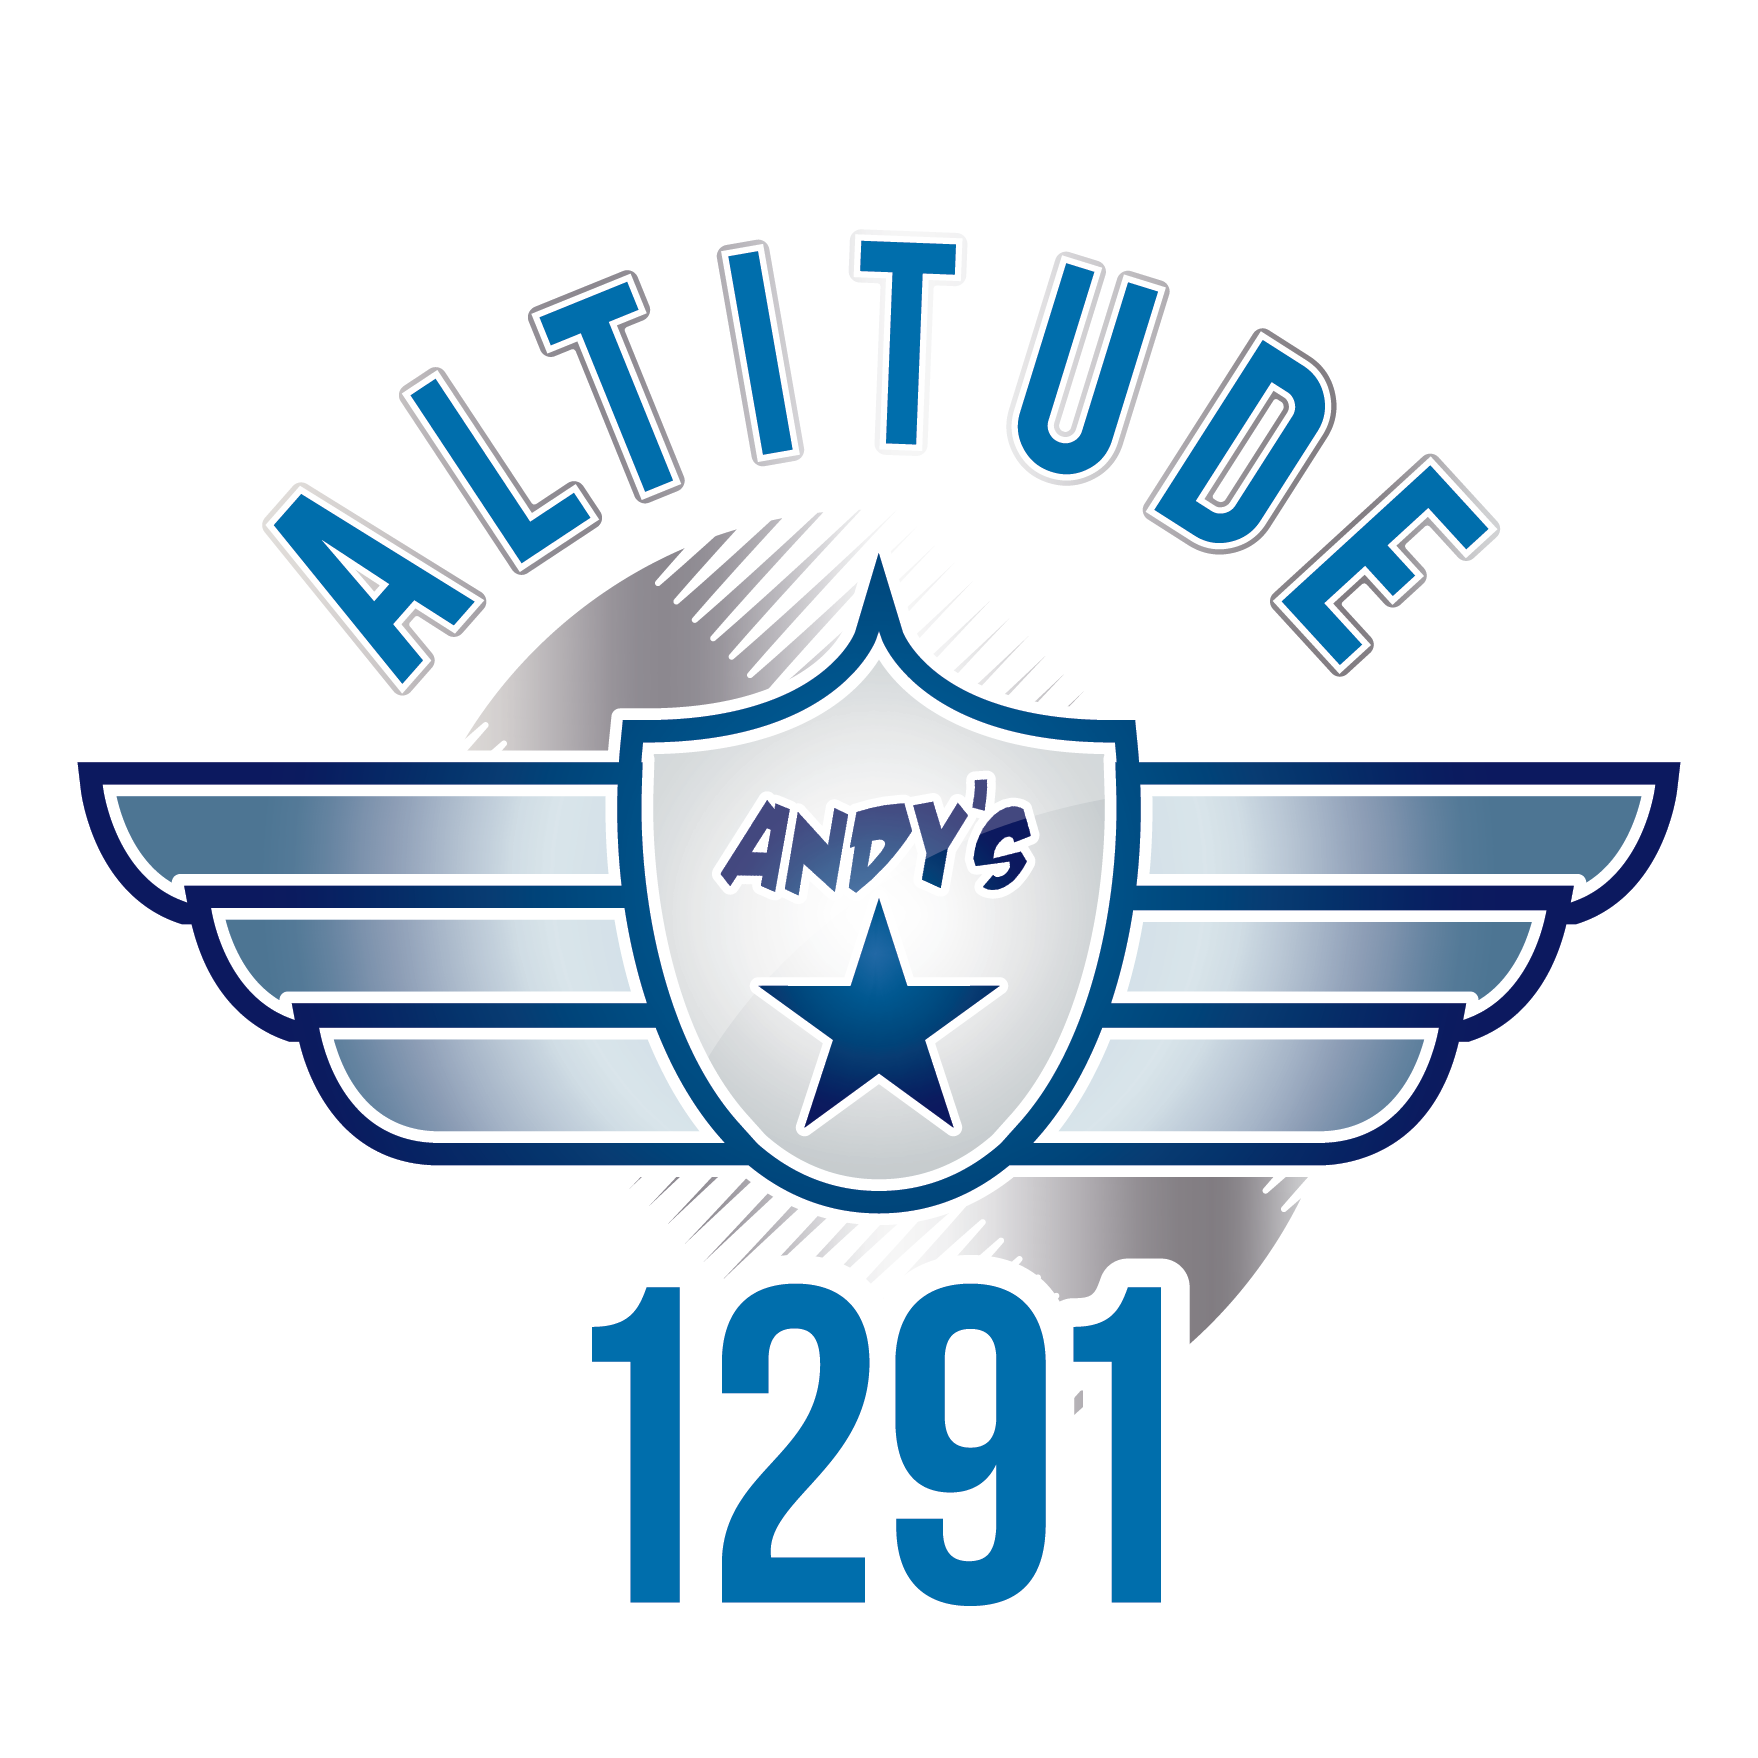 Altitude 1291